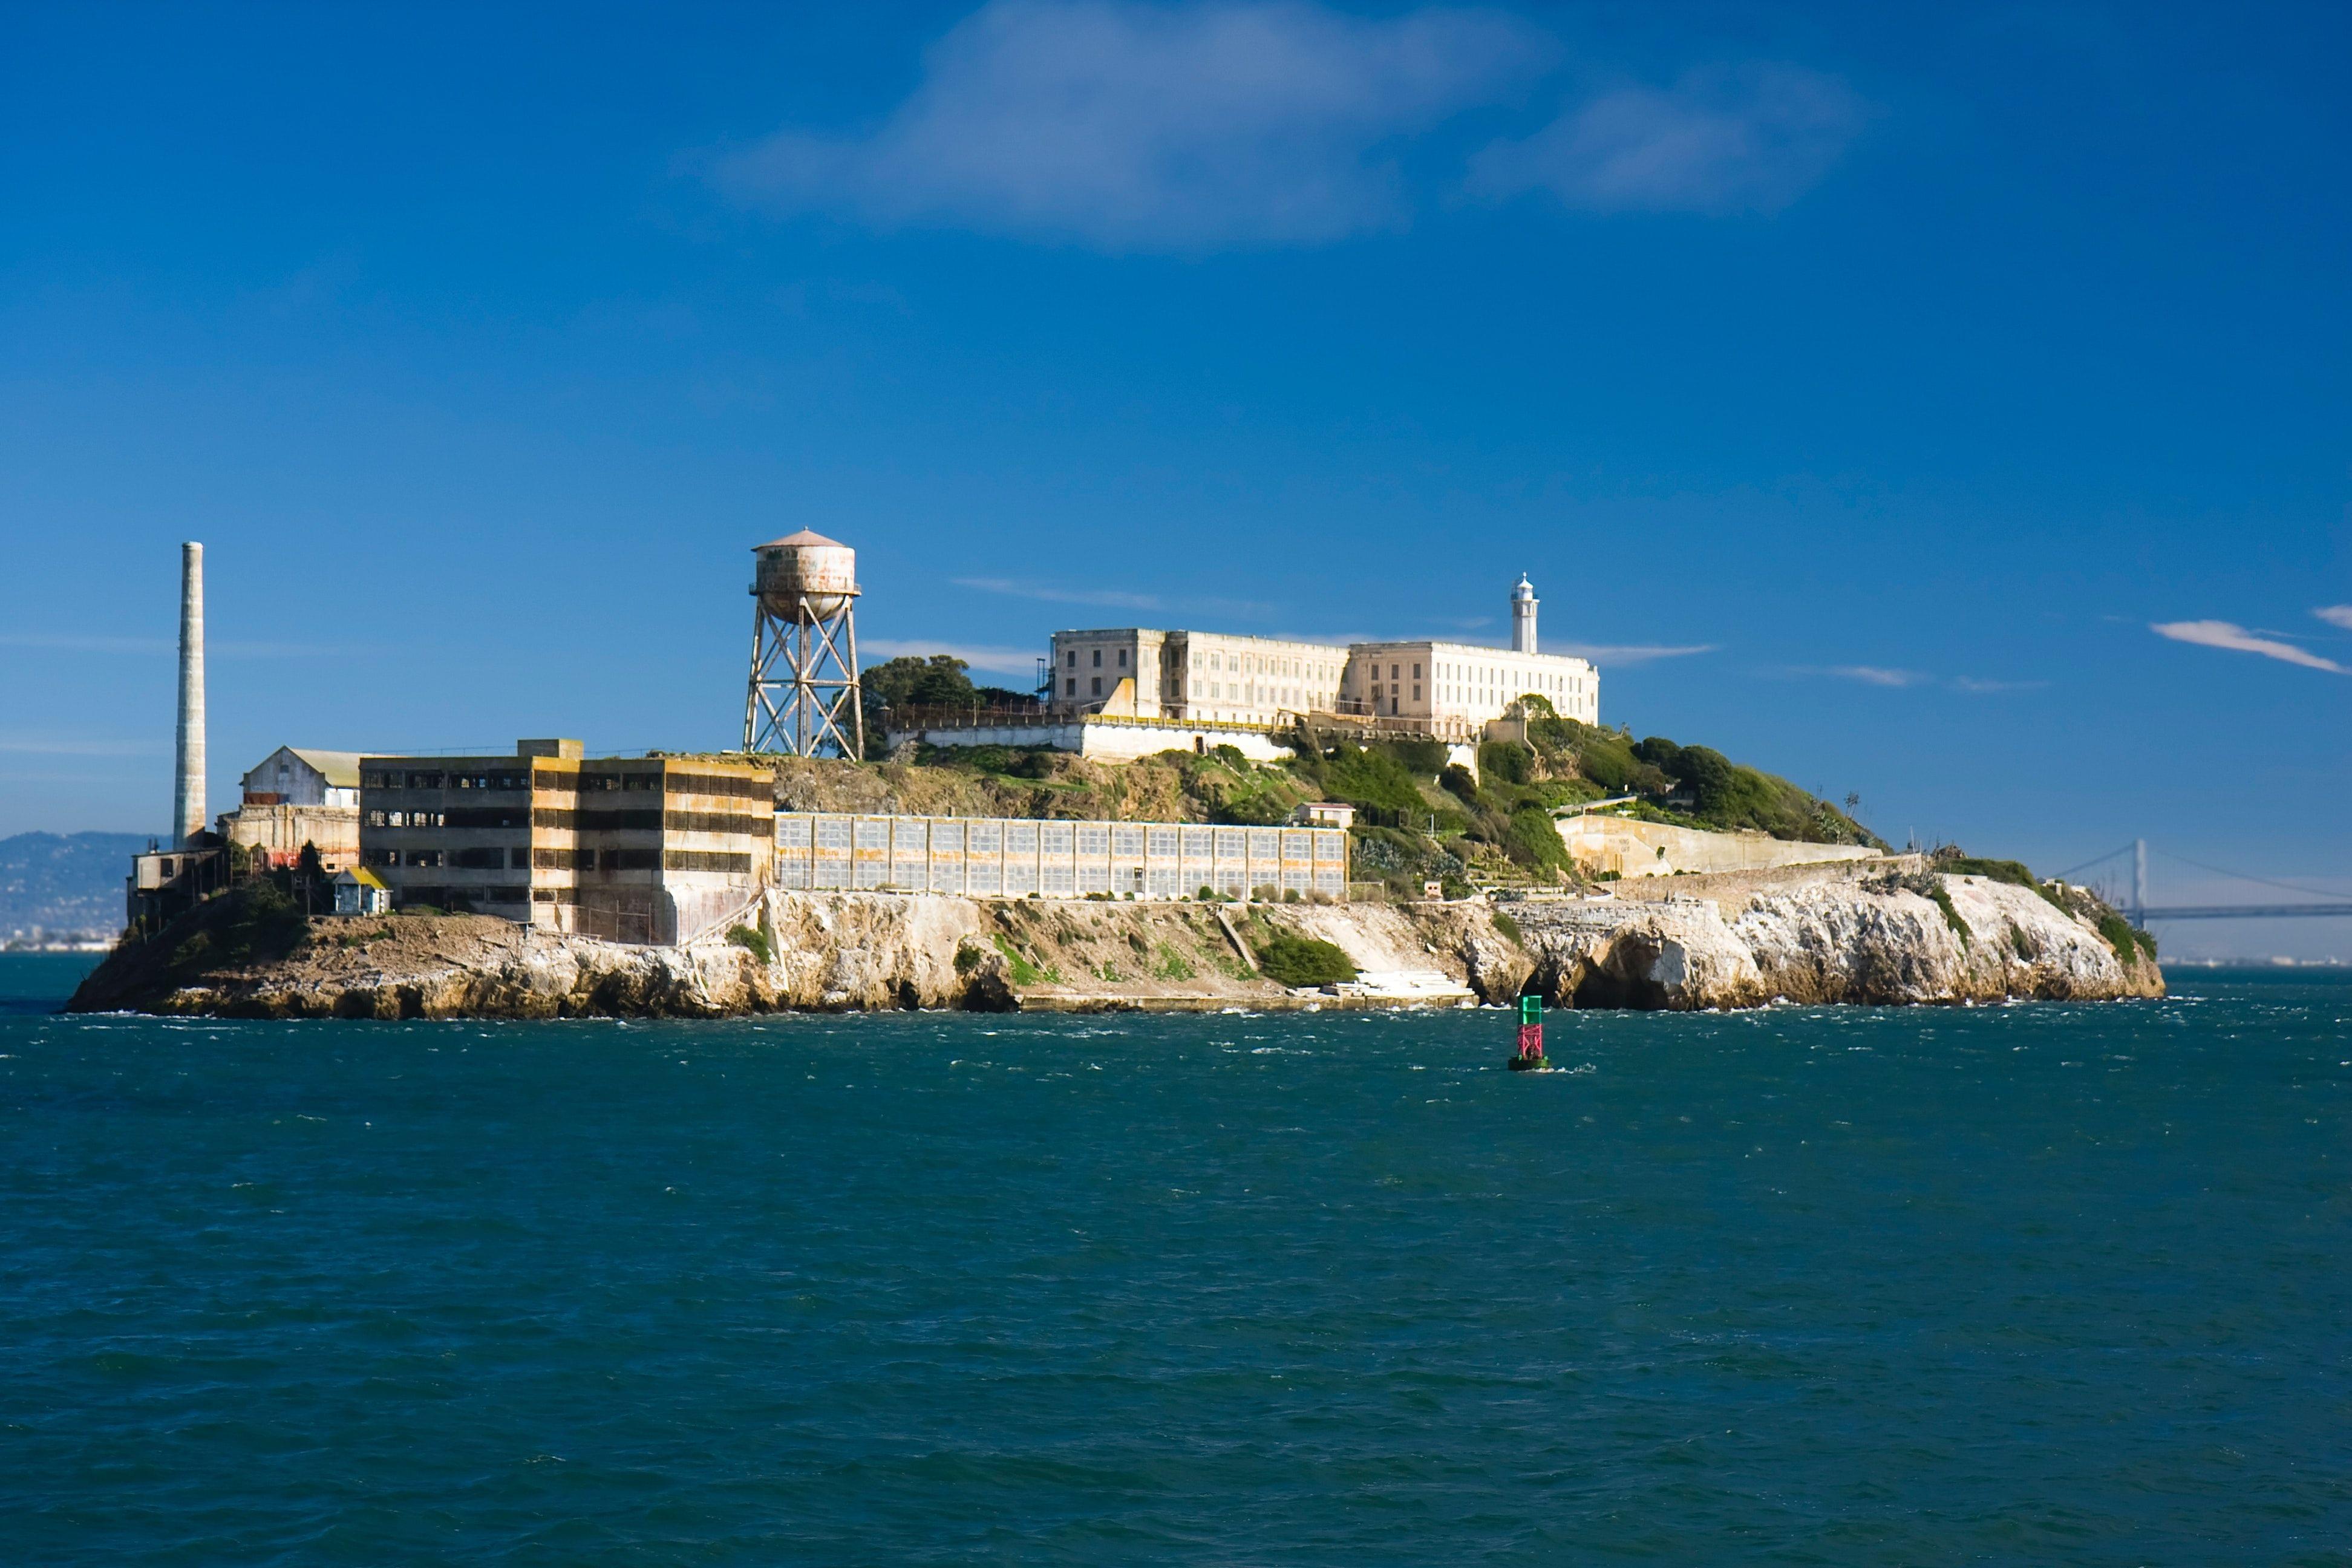 Alcatraz Tours